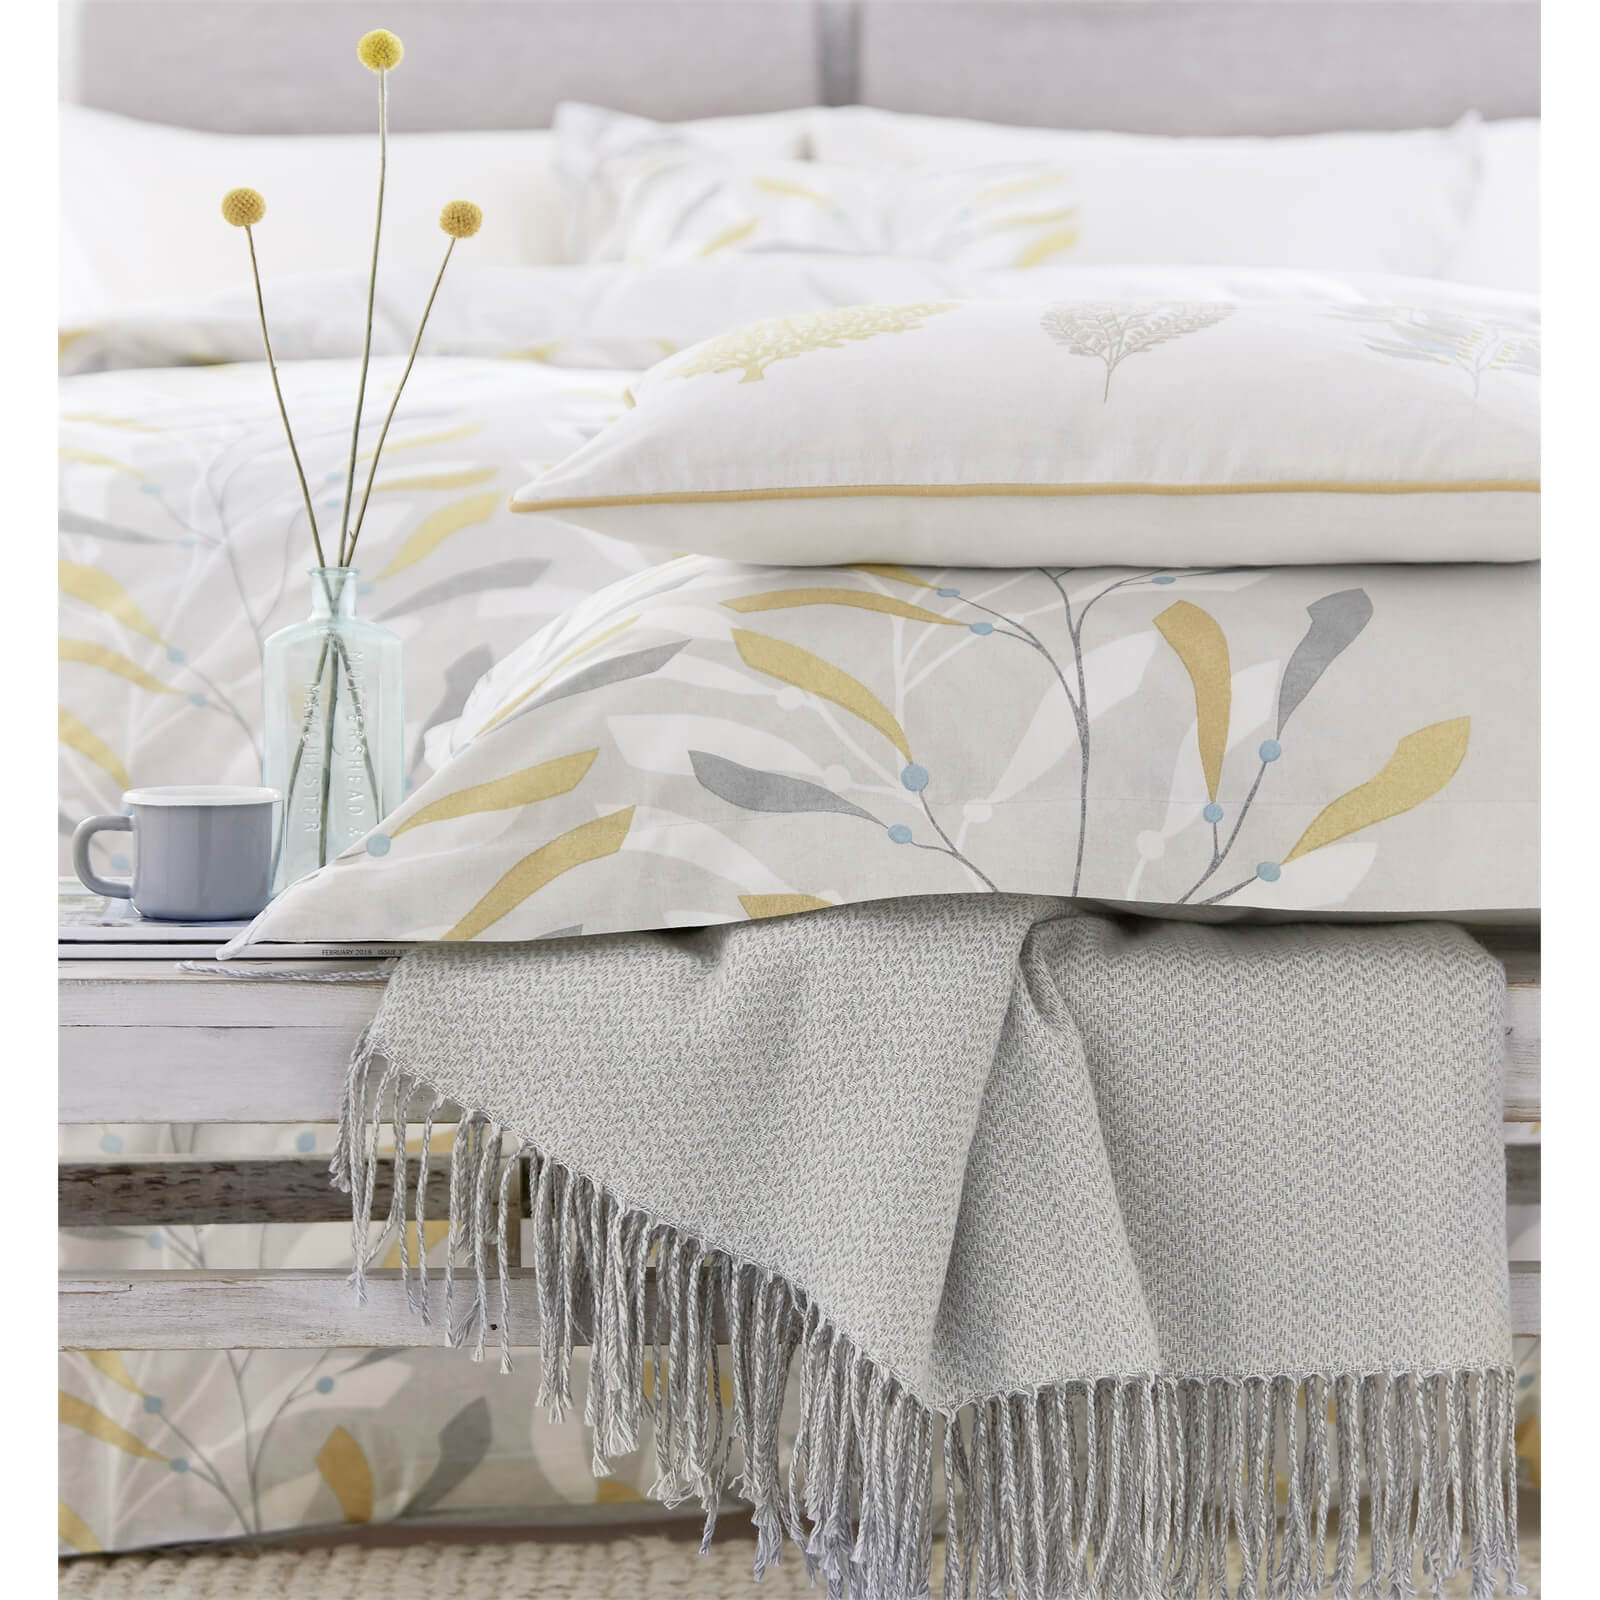 Sanderson Home Sea Kelp Oxford Pillowcase - Ochre